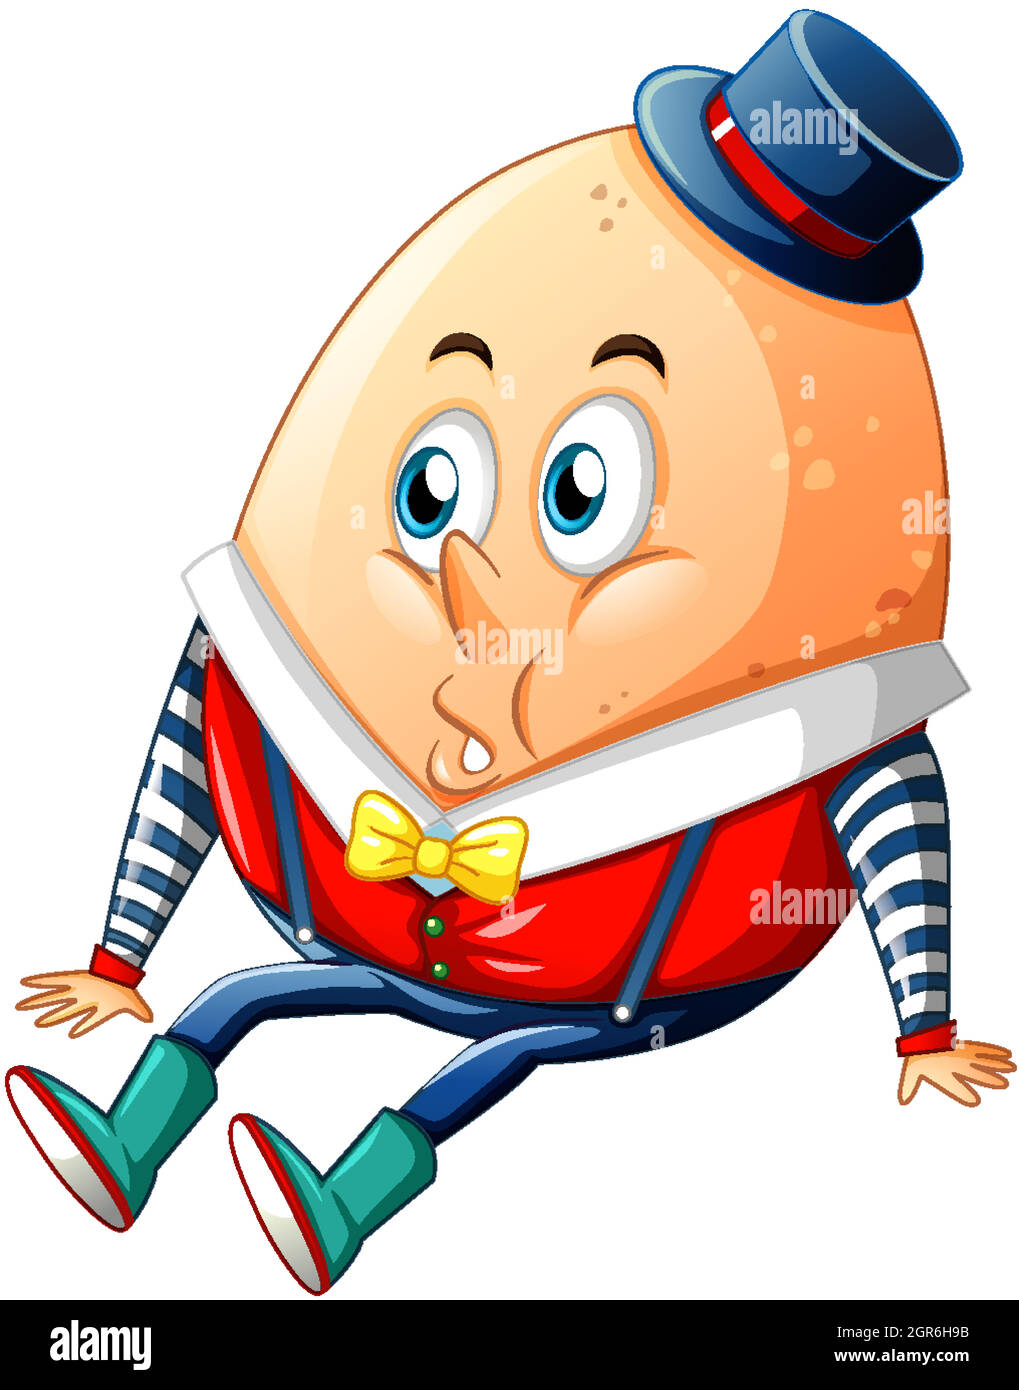 Humpty dumpty egg cartoon character on white background Stock Vector